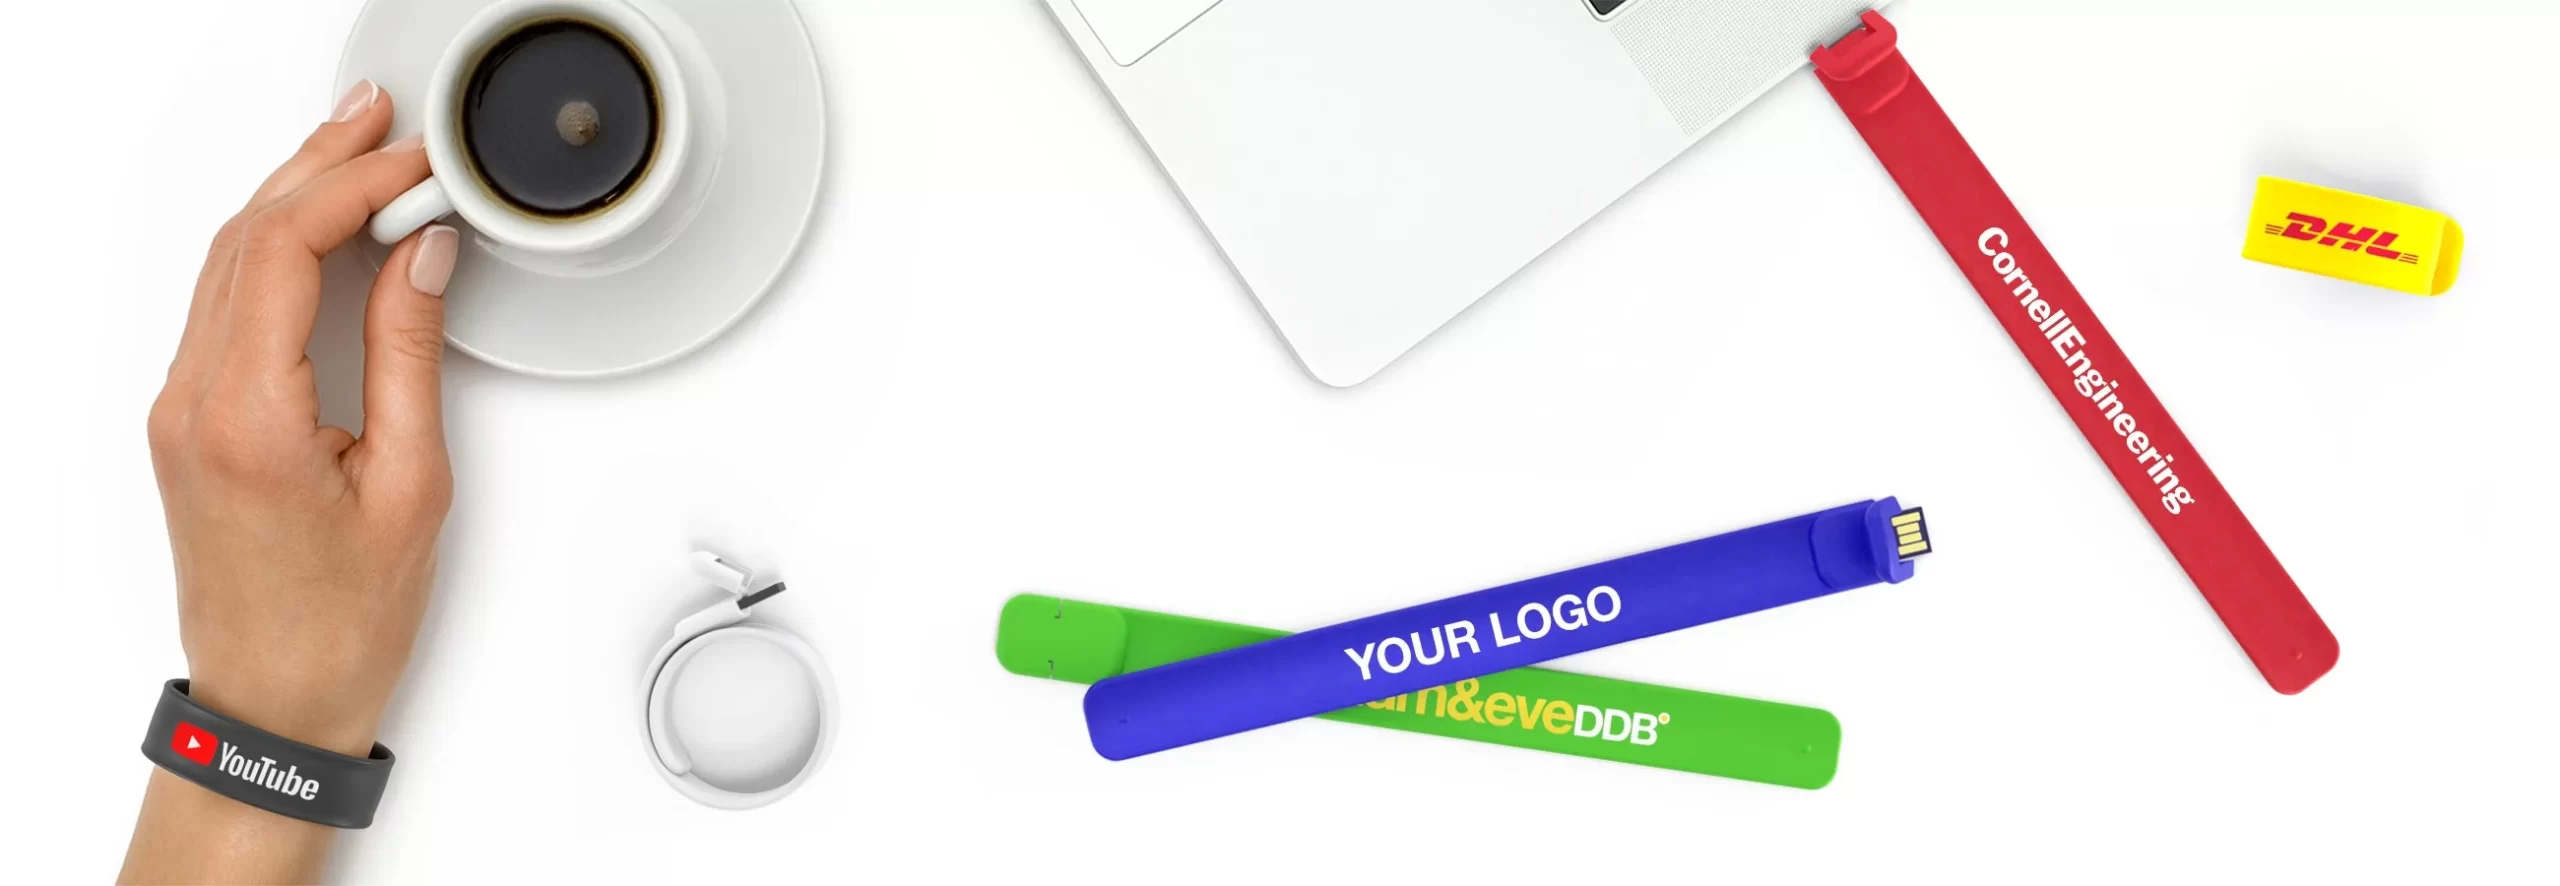 Custom wristband USB flash drive with your logo